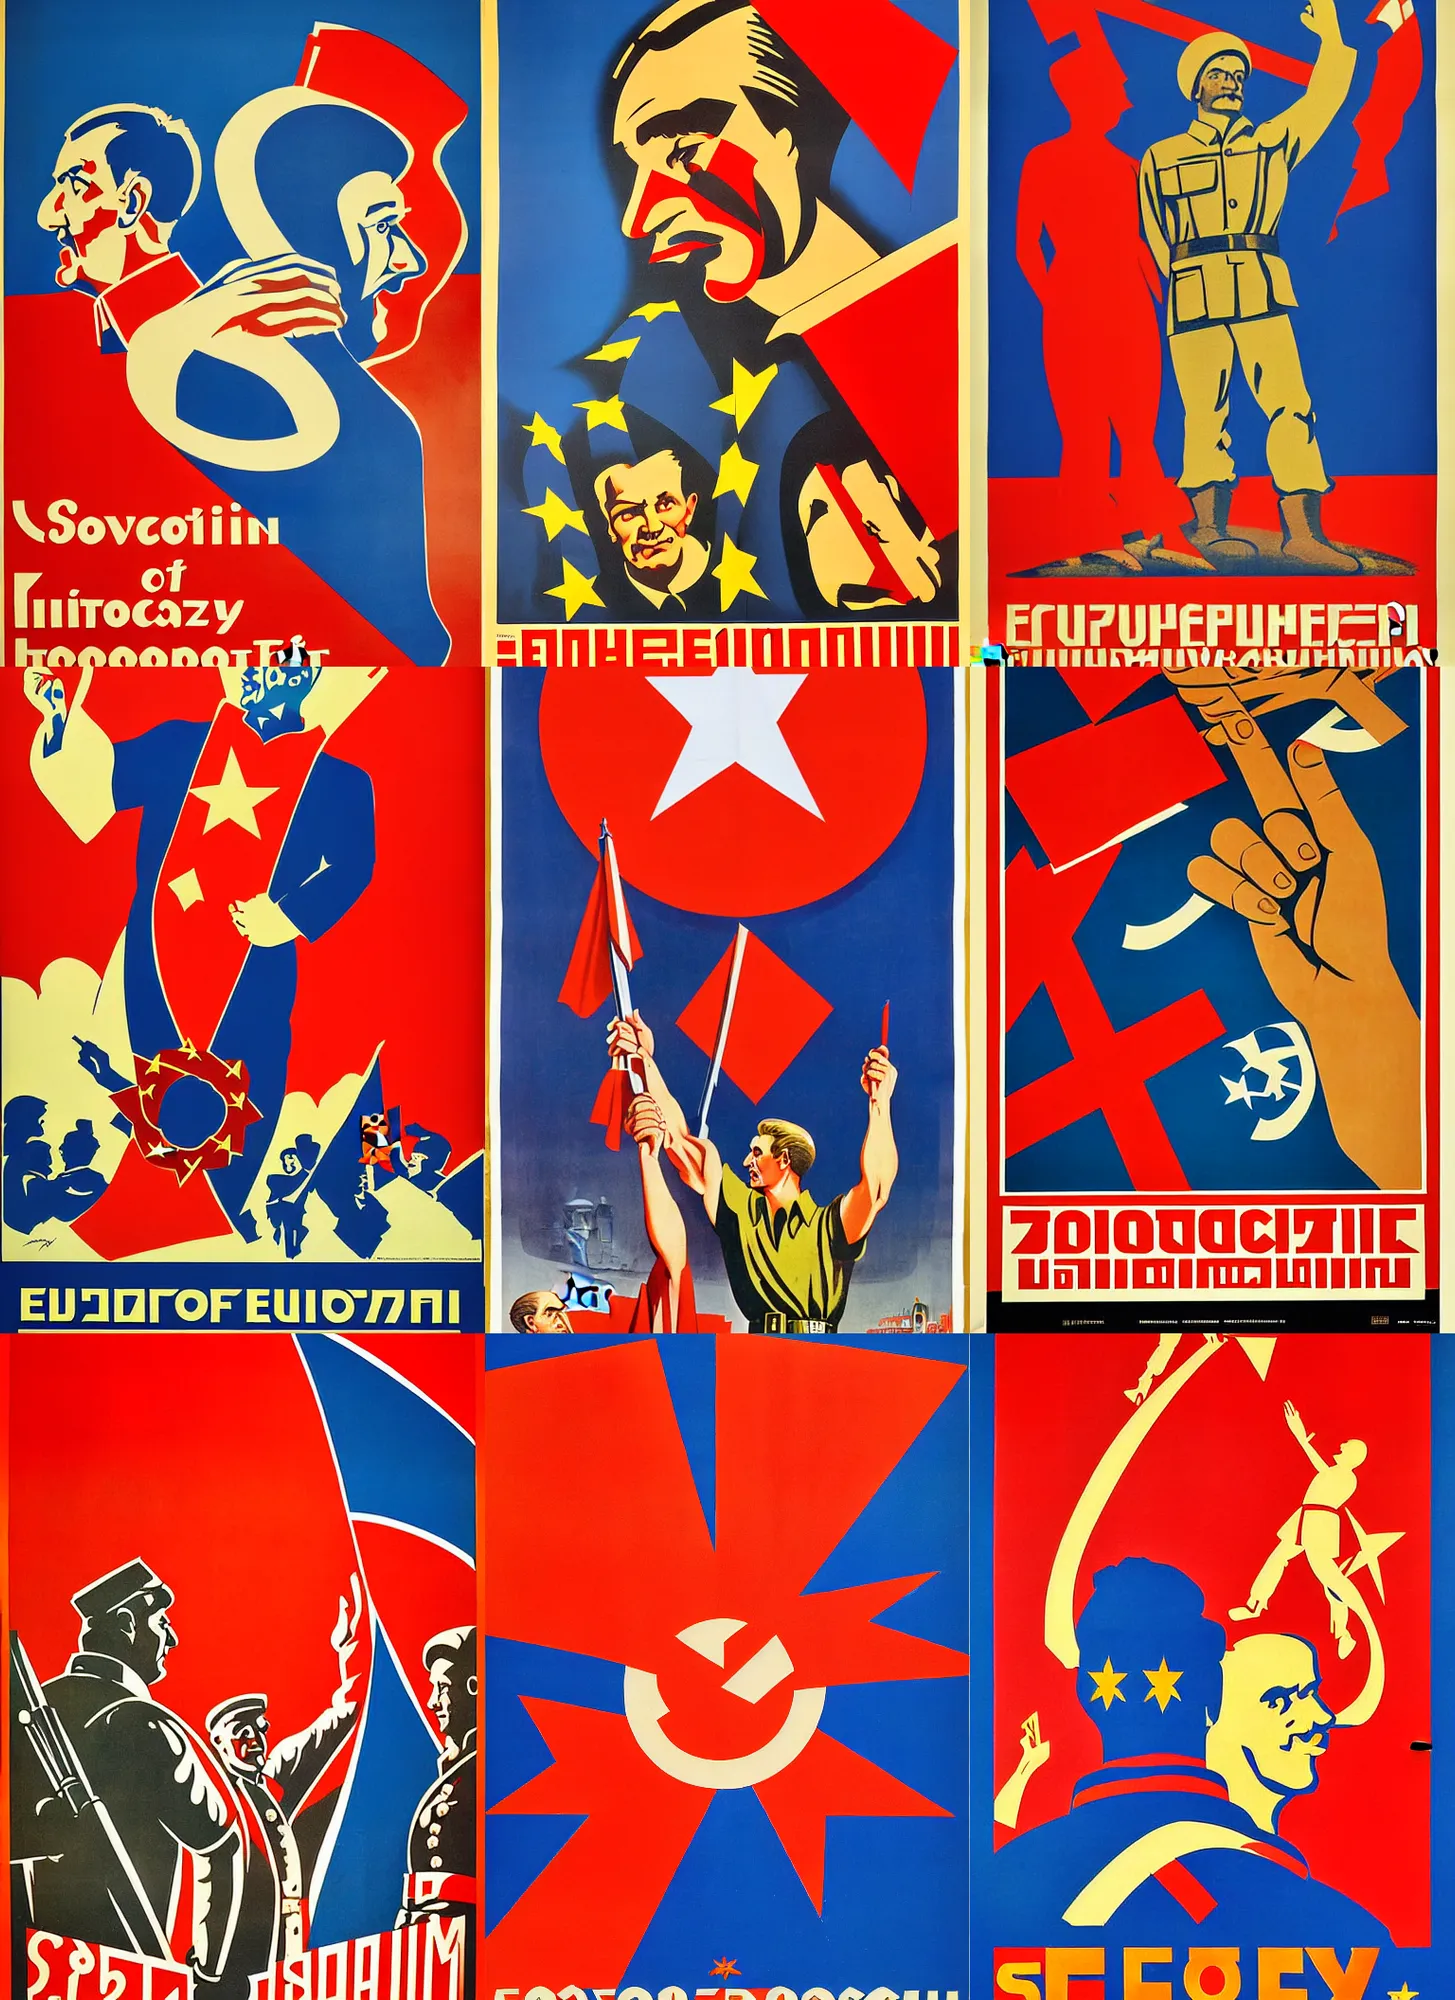 Prompt: soviet propaganda poster of the union of european soviets, socialist realism. by alexander zelensky, viktor deni, havrylo pustoviyt